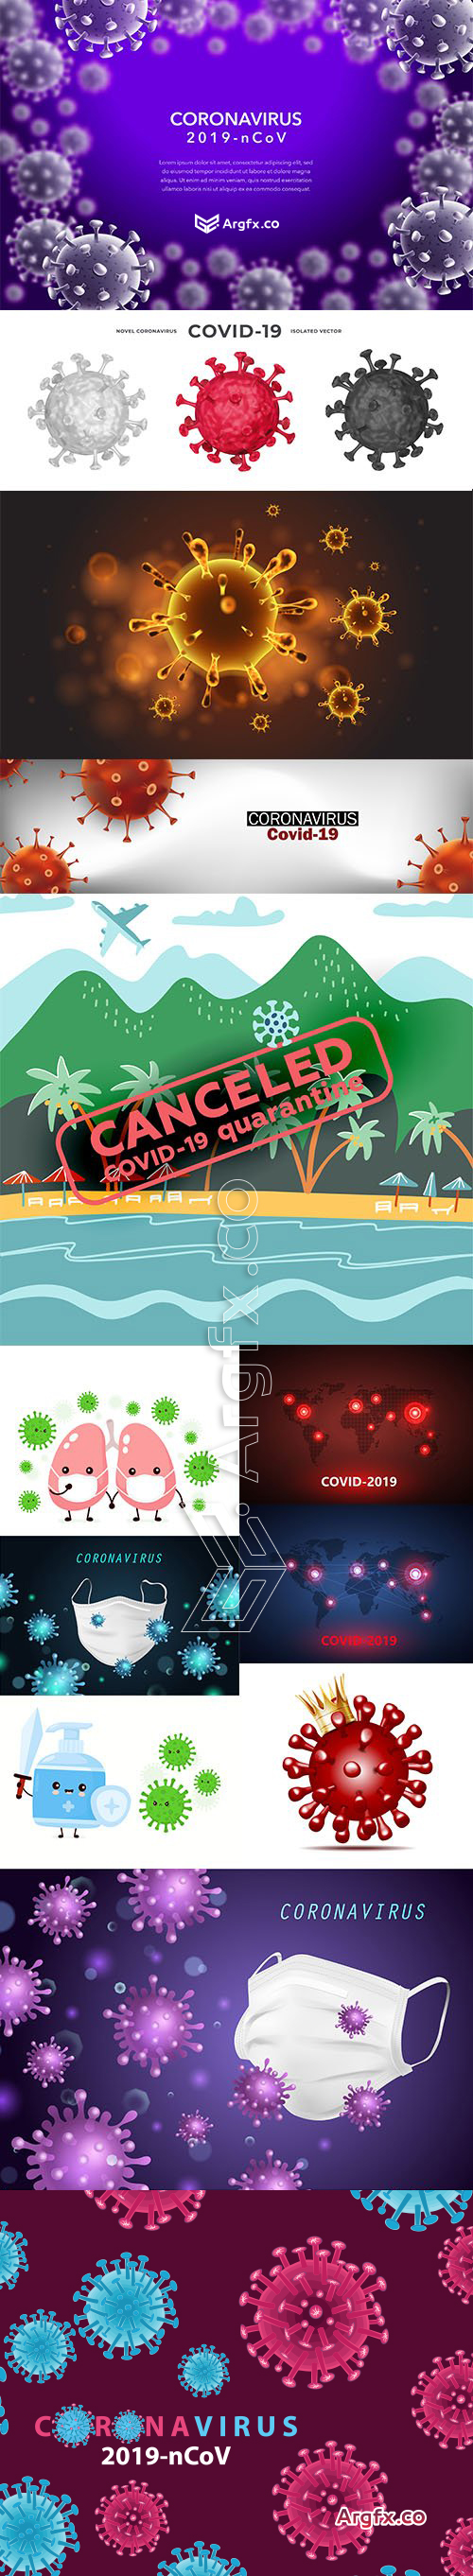 Coronavirus Covid-19 Virus Big Illustration Bundle Vol 3